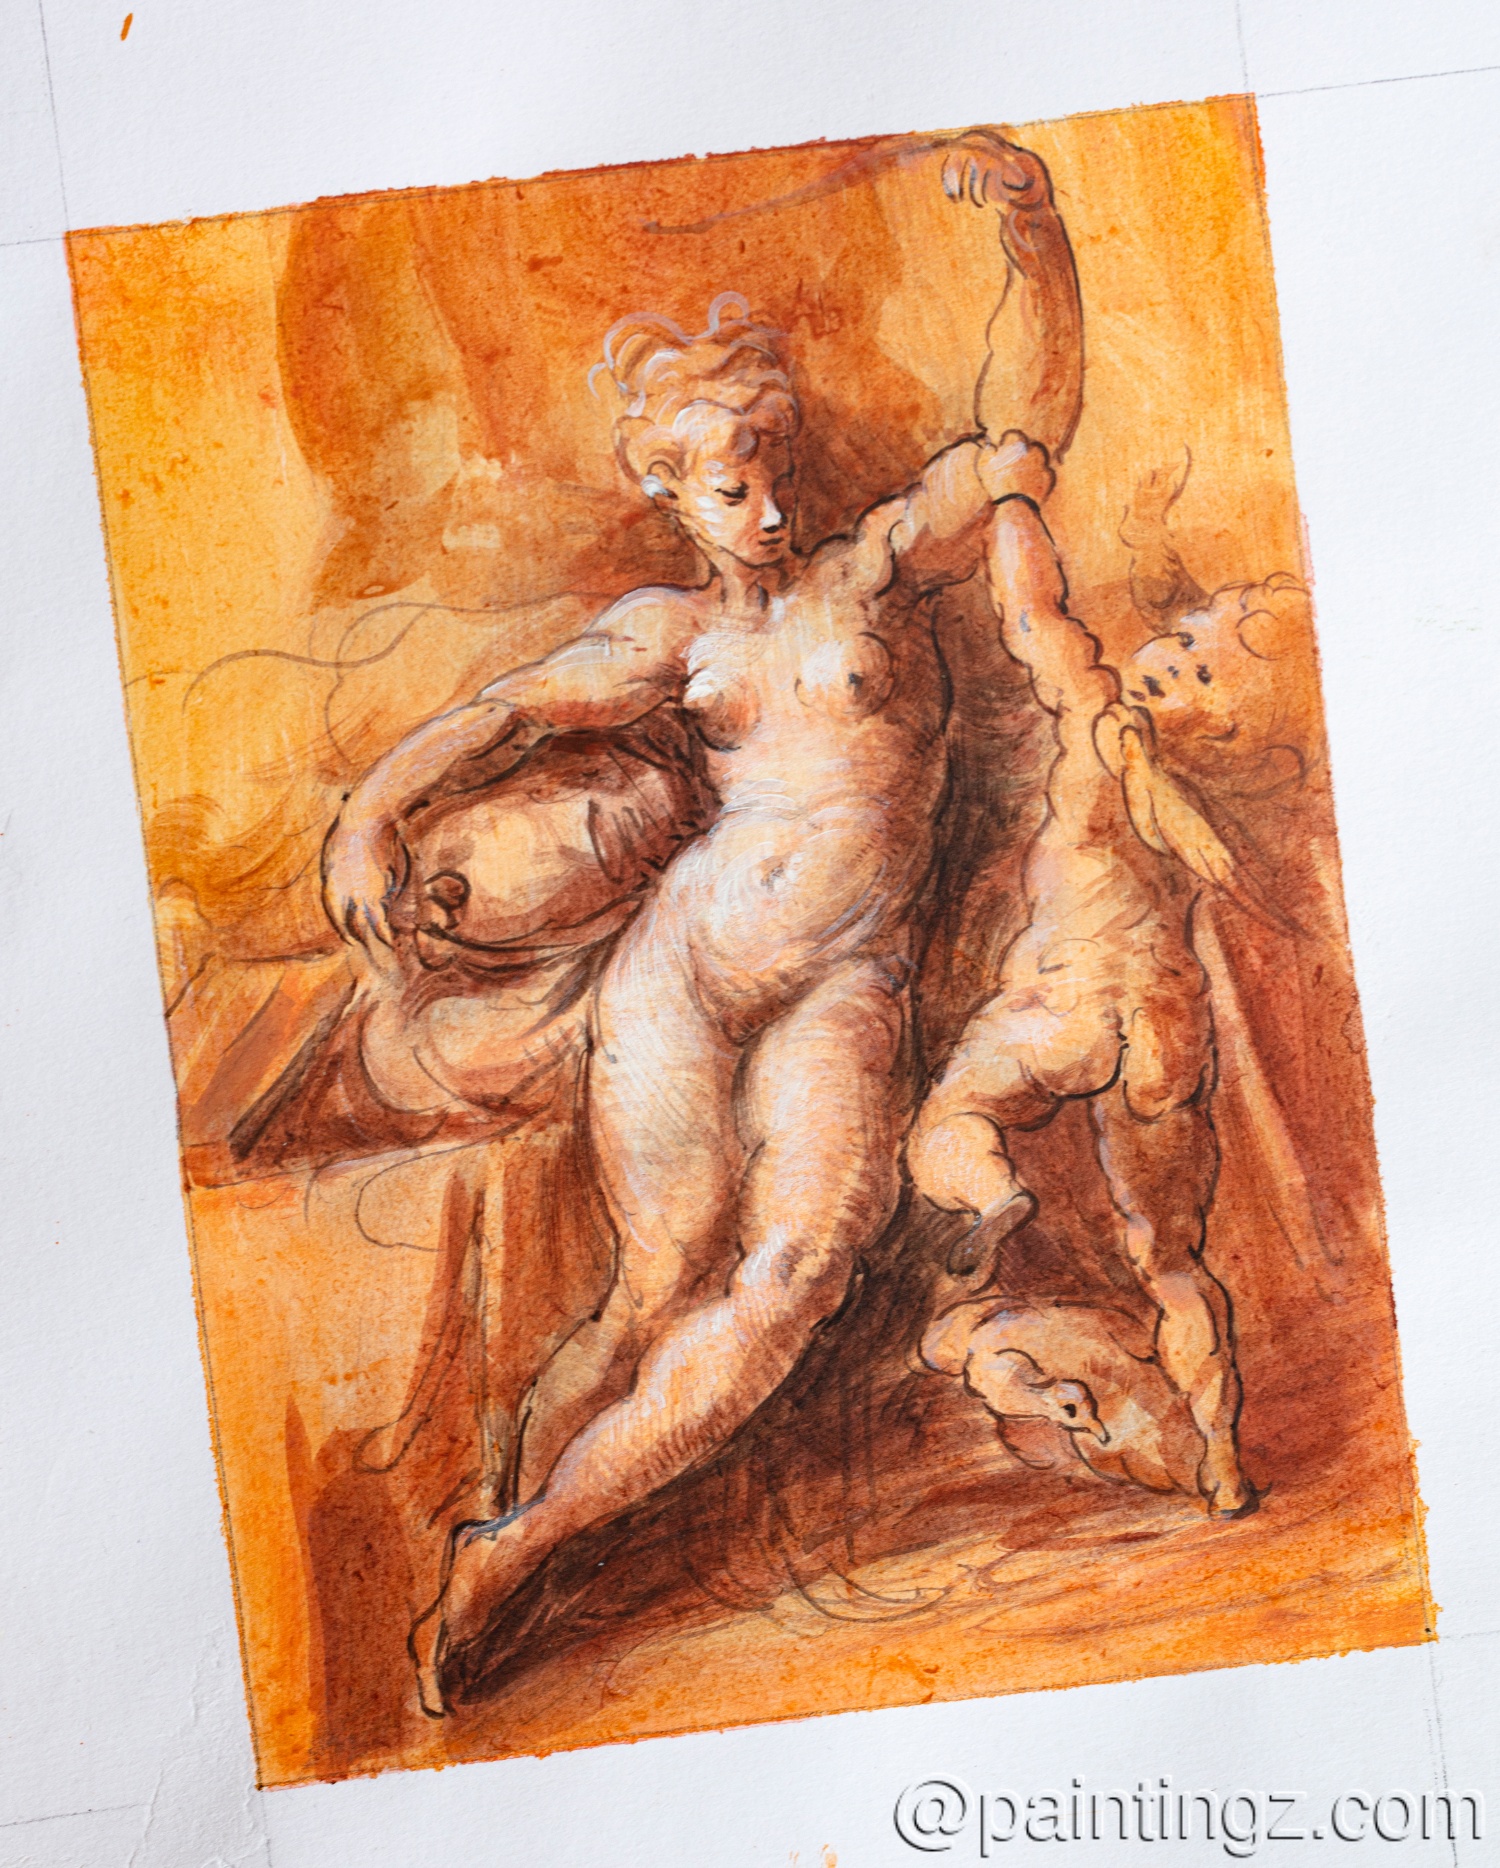 A Reproduction of Parmigianinoca's Venus Disarming Cupid, Brown Ink & Pencil on Paper